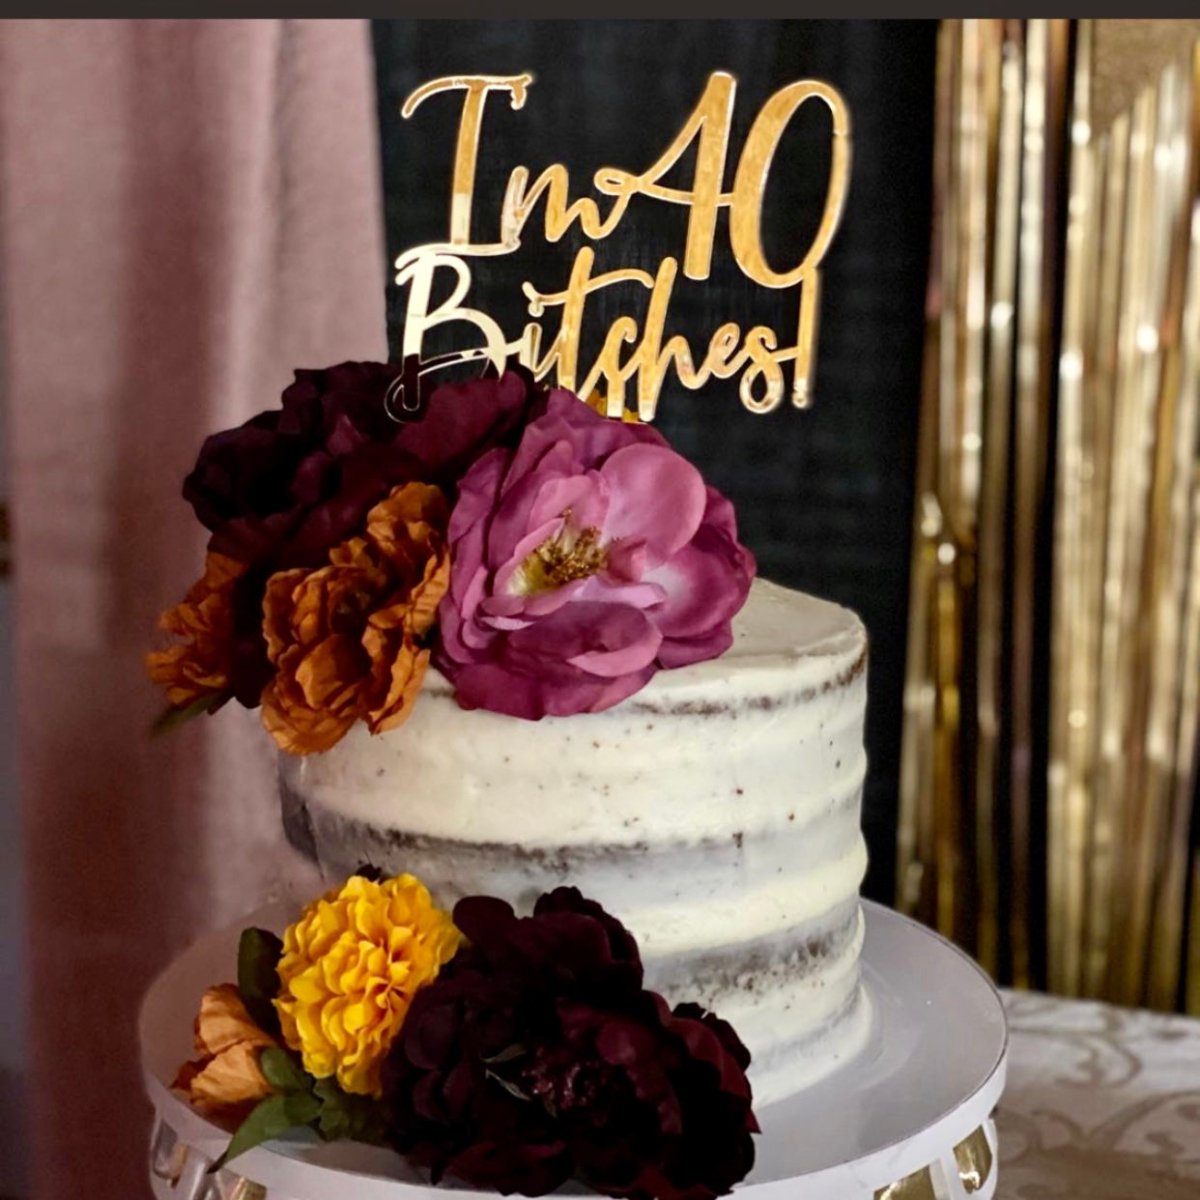 ‘I’m 40 Bitches!’ Birthday Cake Topper Cake Topper - VividEditions